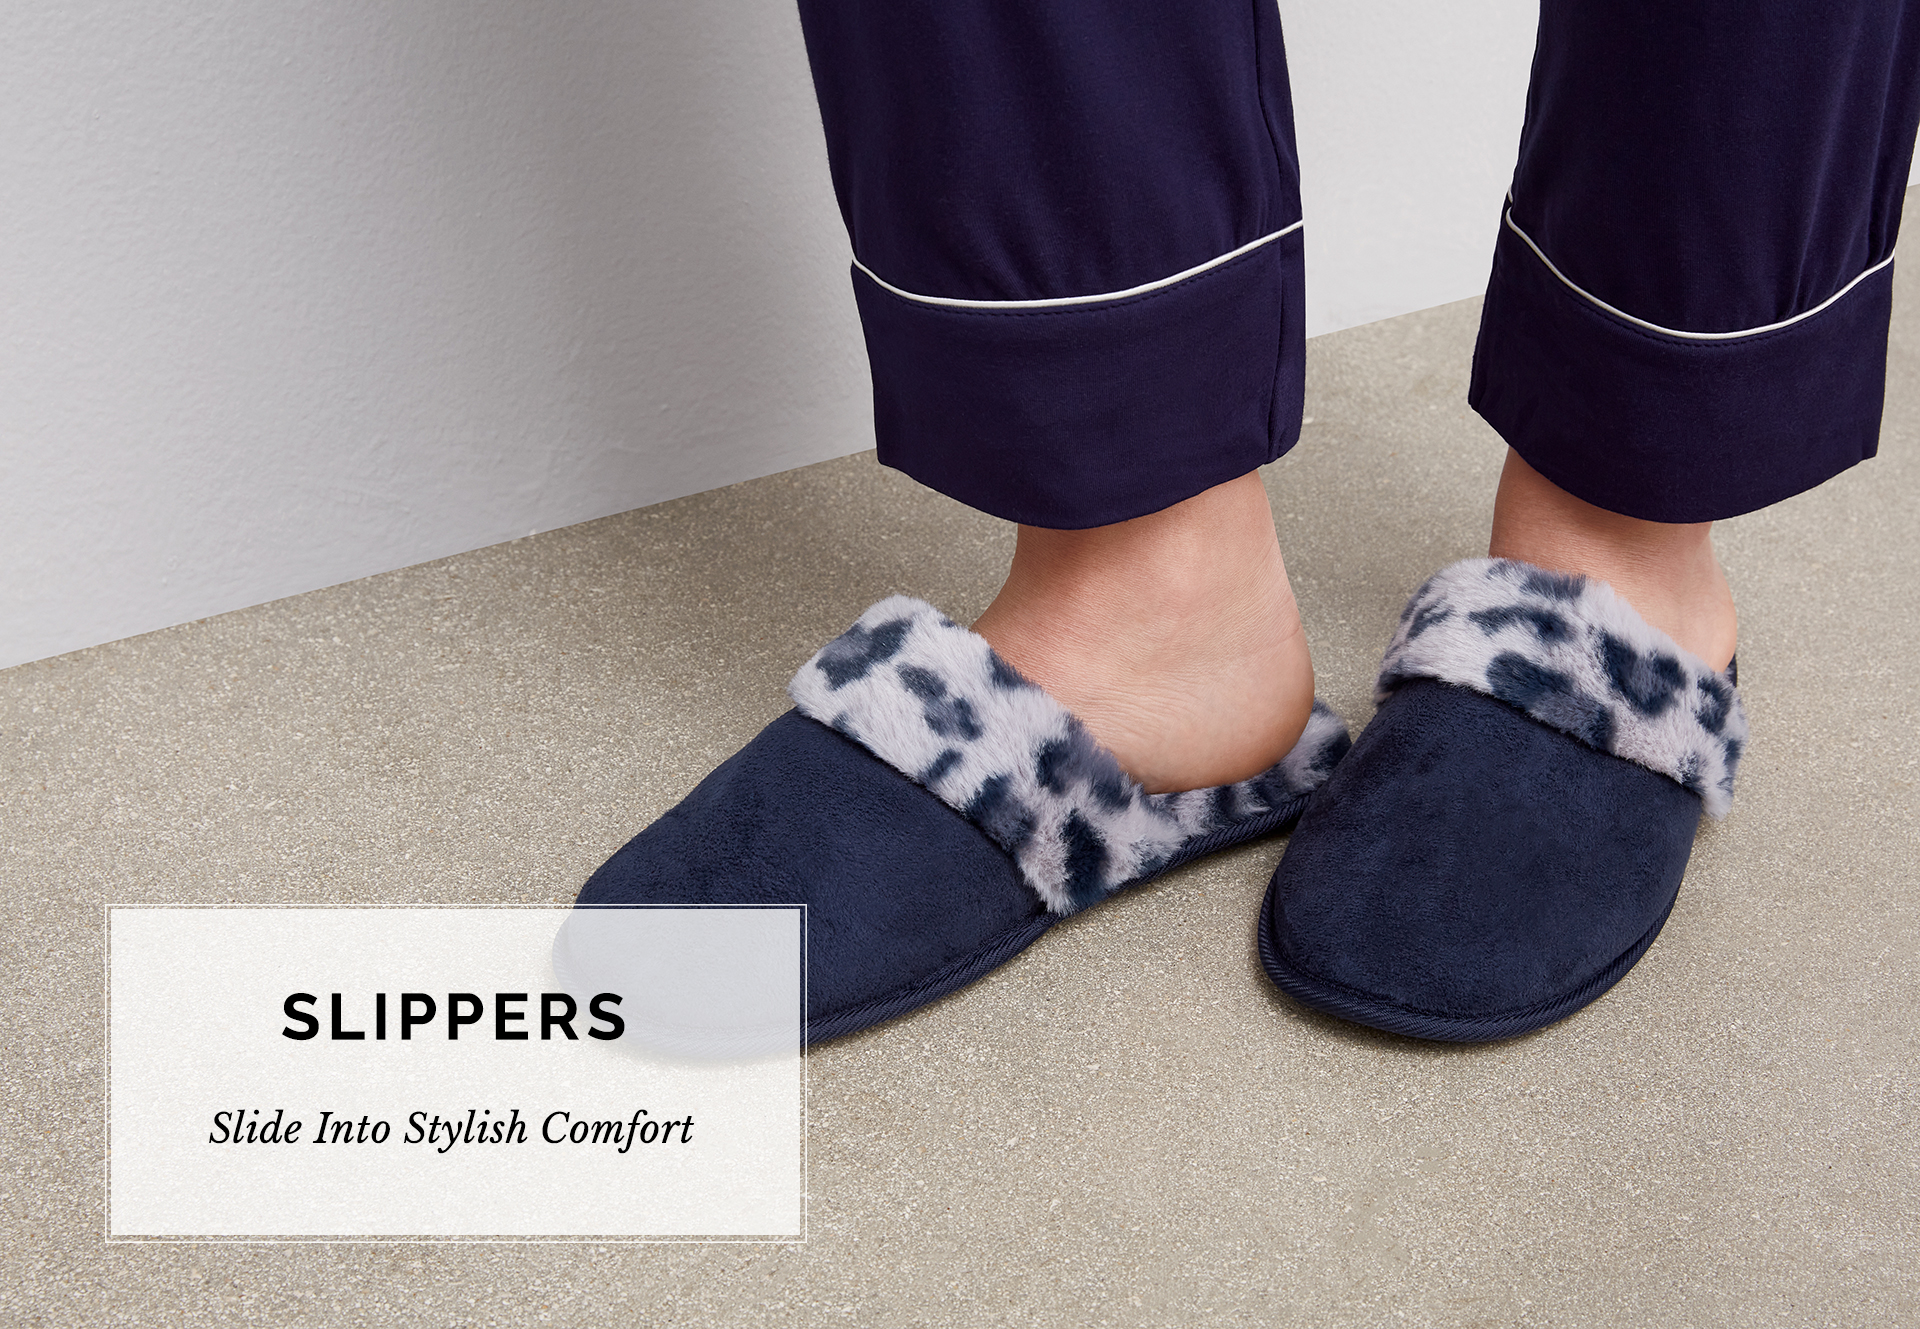 Slippers - Slide Into Stylish Comfort